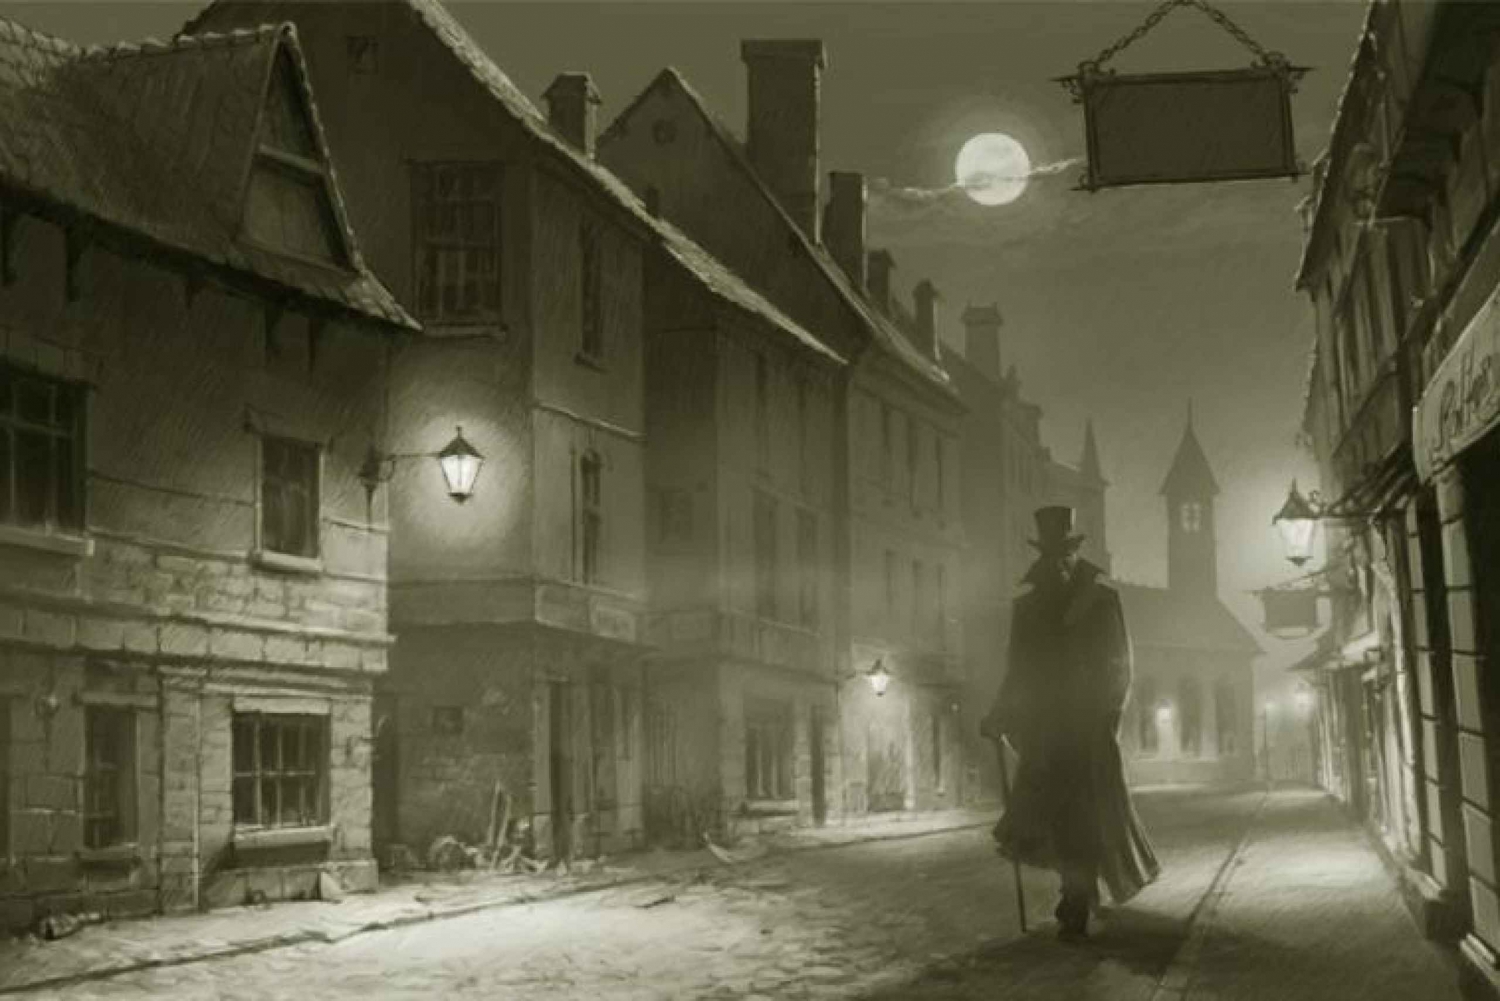 London: Jack the Ripper 2-timmars kvällsvandring